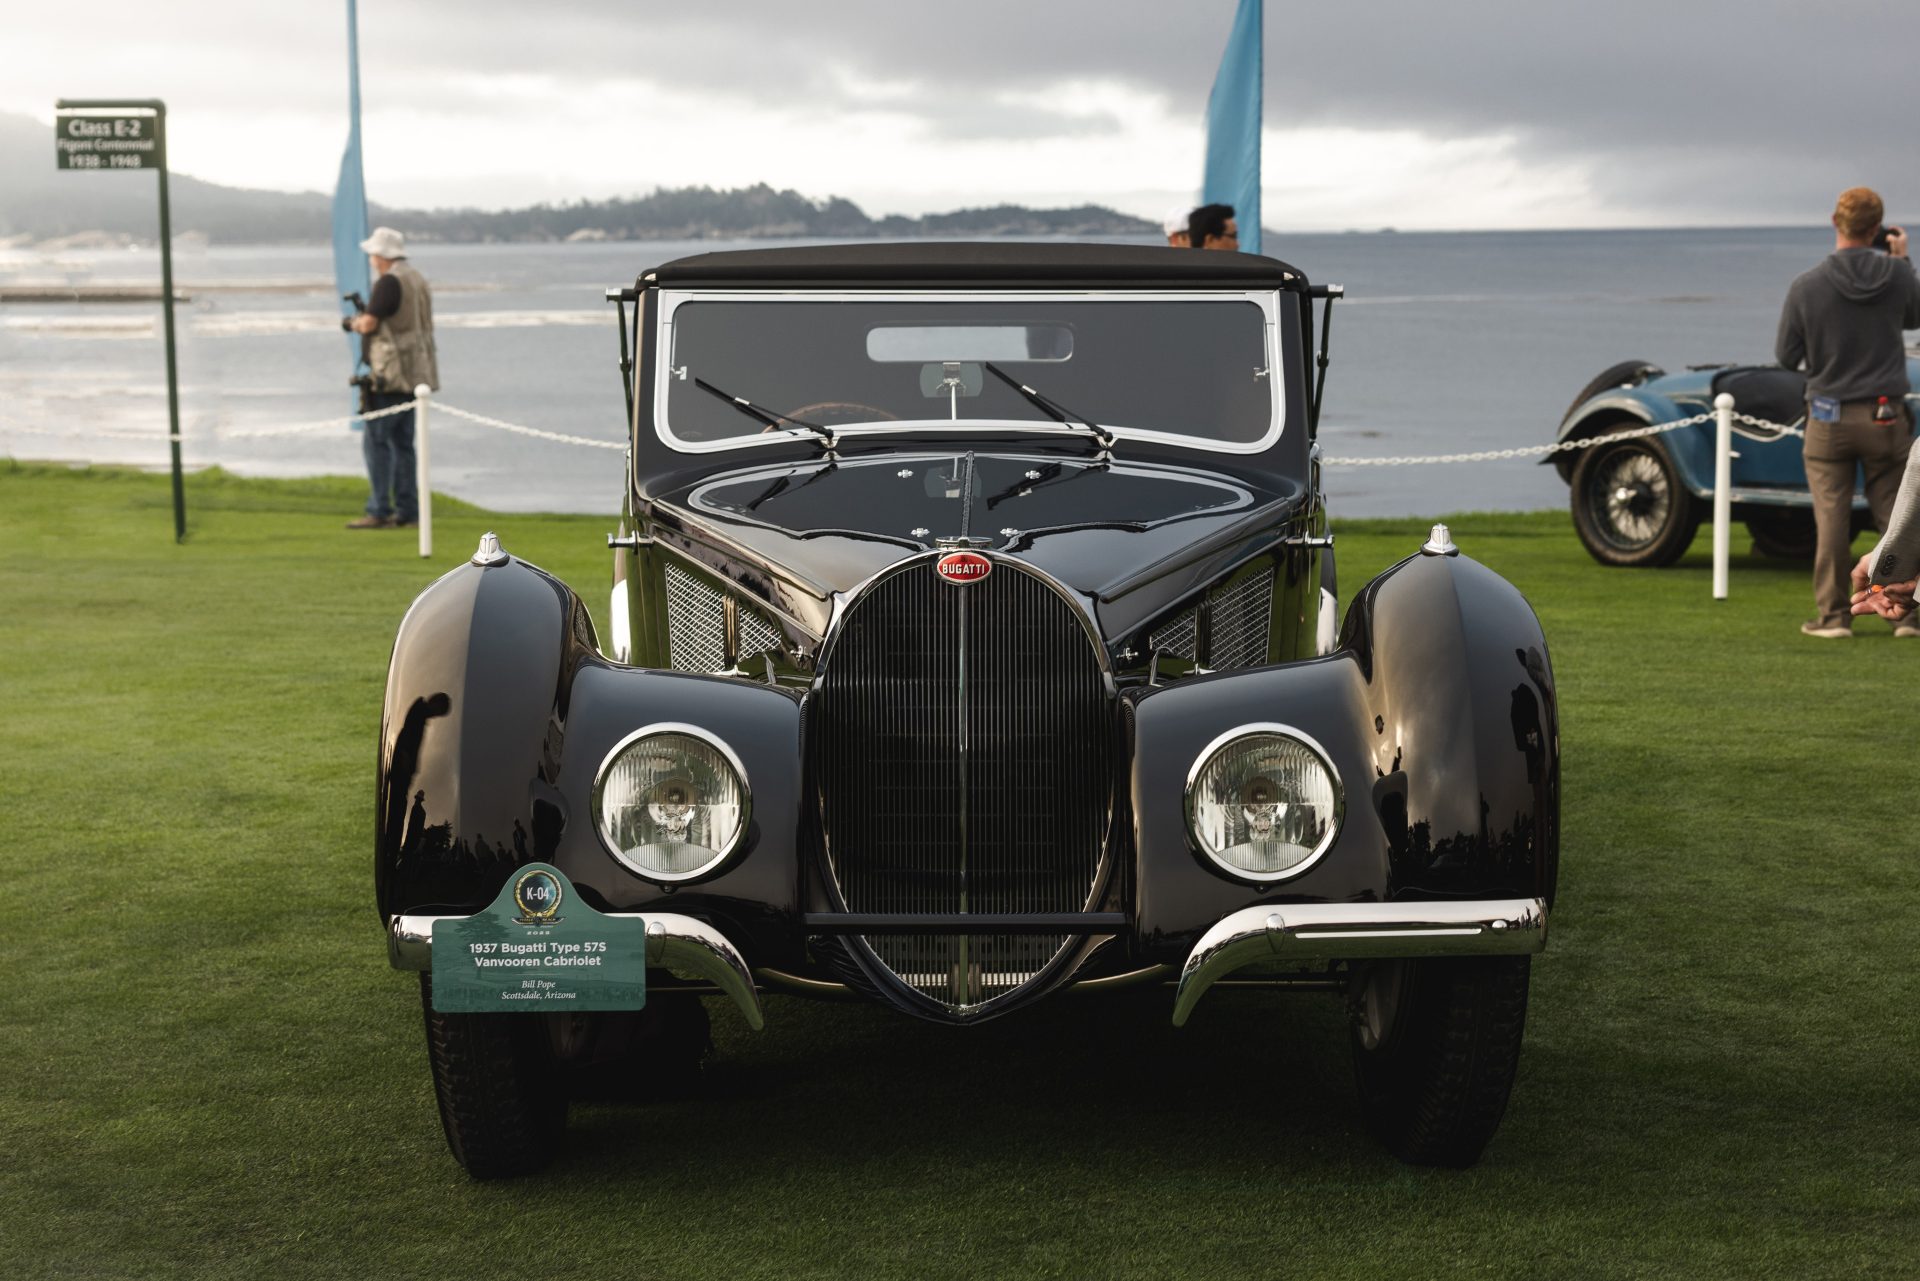 07 BUGATTI Concours PB 57S Cabriolet Pebble Beach Concours D'Elegance 2023: Ένας εορτασμός της κληρονομιάς της Bugatti